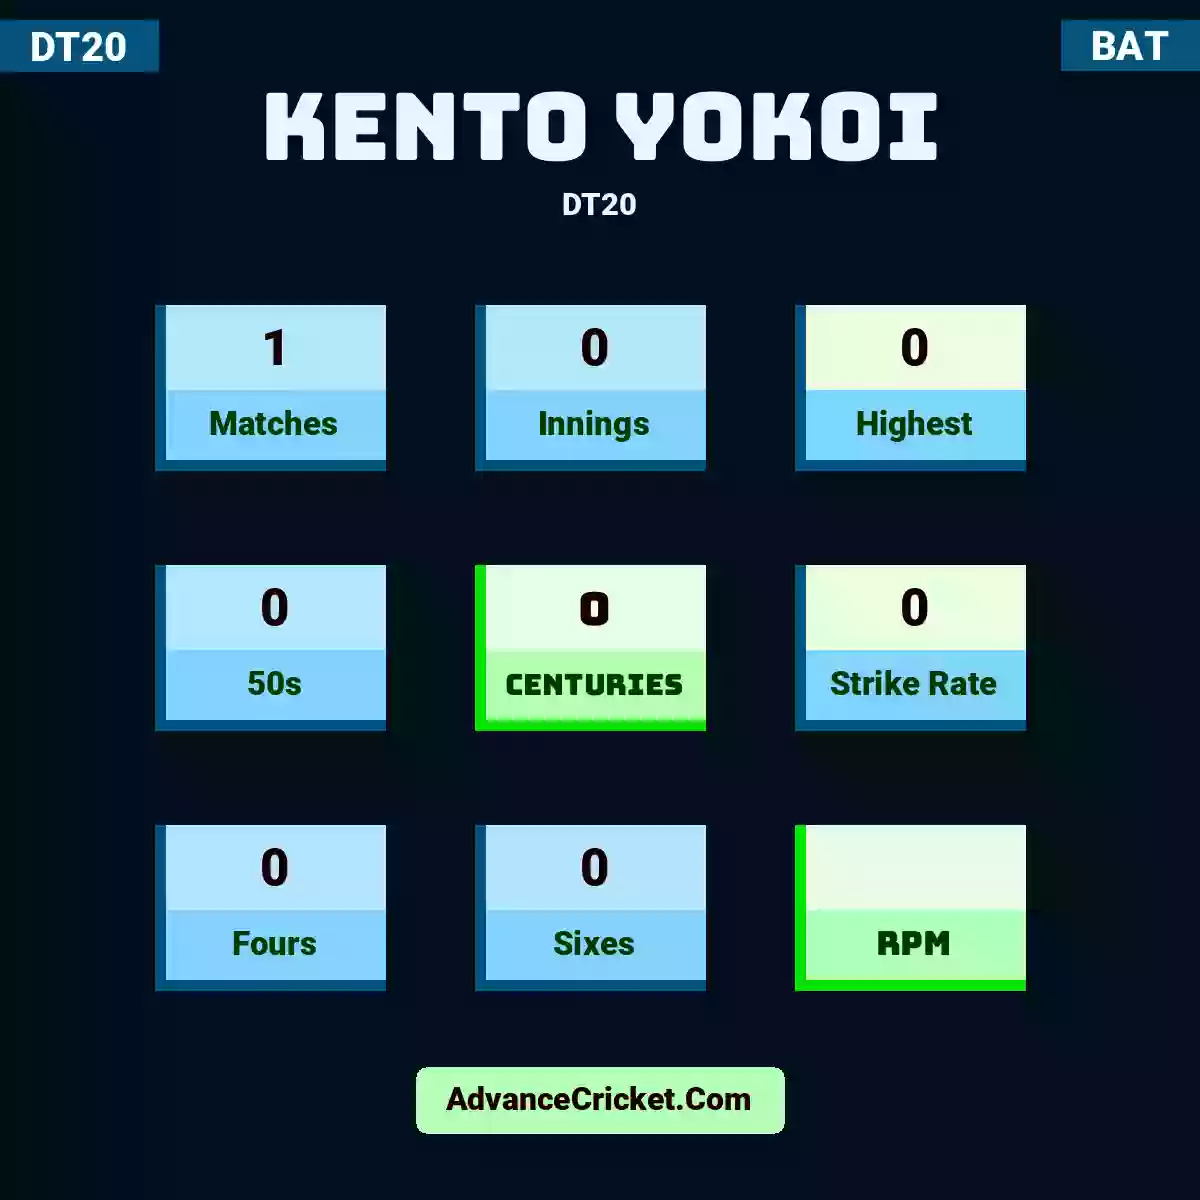 Kento Yokoi DT20 , Kento Yokoi played 1 matches, scored 0 runs as highest, 0 half-centuries, and 0 centuries, with a strike rate of 0. K.Yokoi hit 0 fours and 0 sixes.